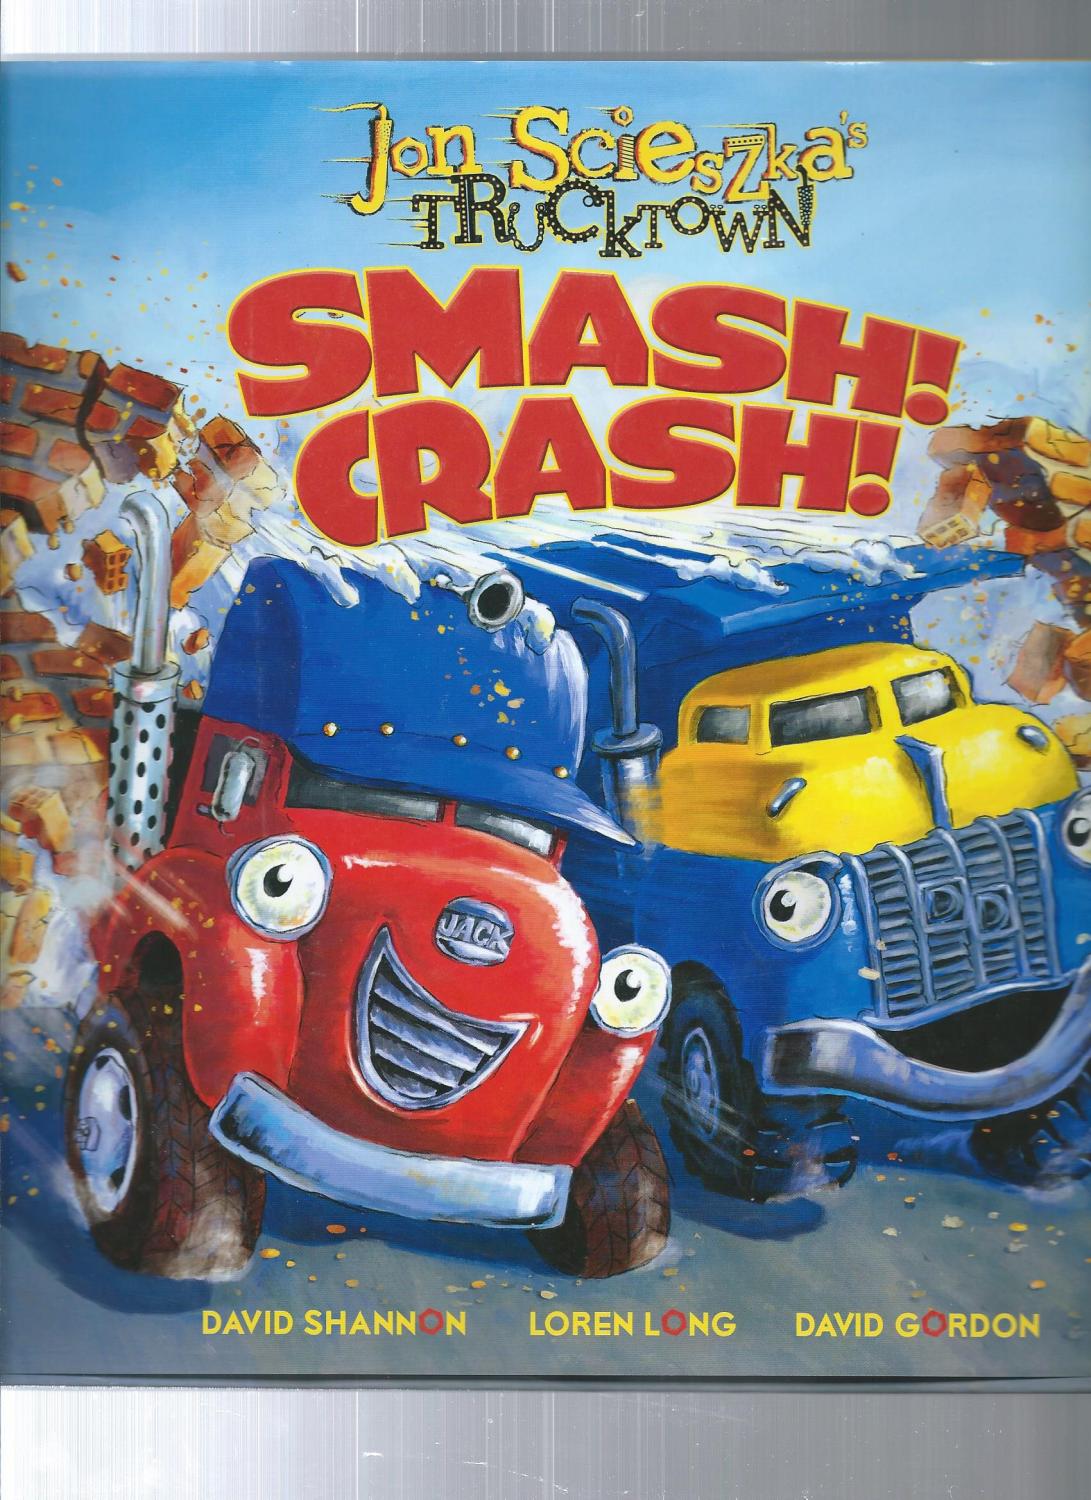 Smash! Crash! by Scieszka, Jon / illust.by David Shannon, Lorne